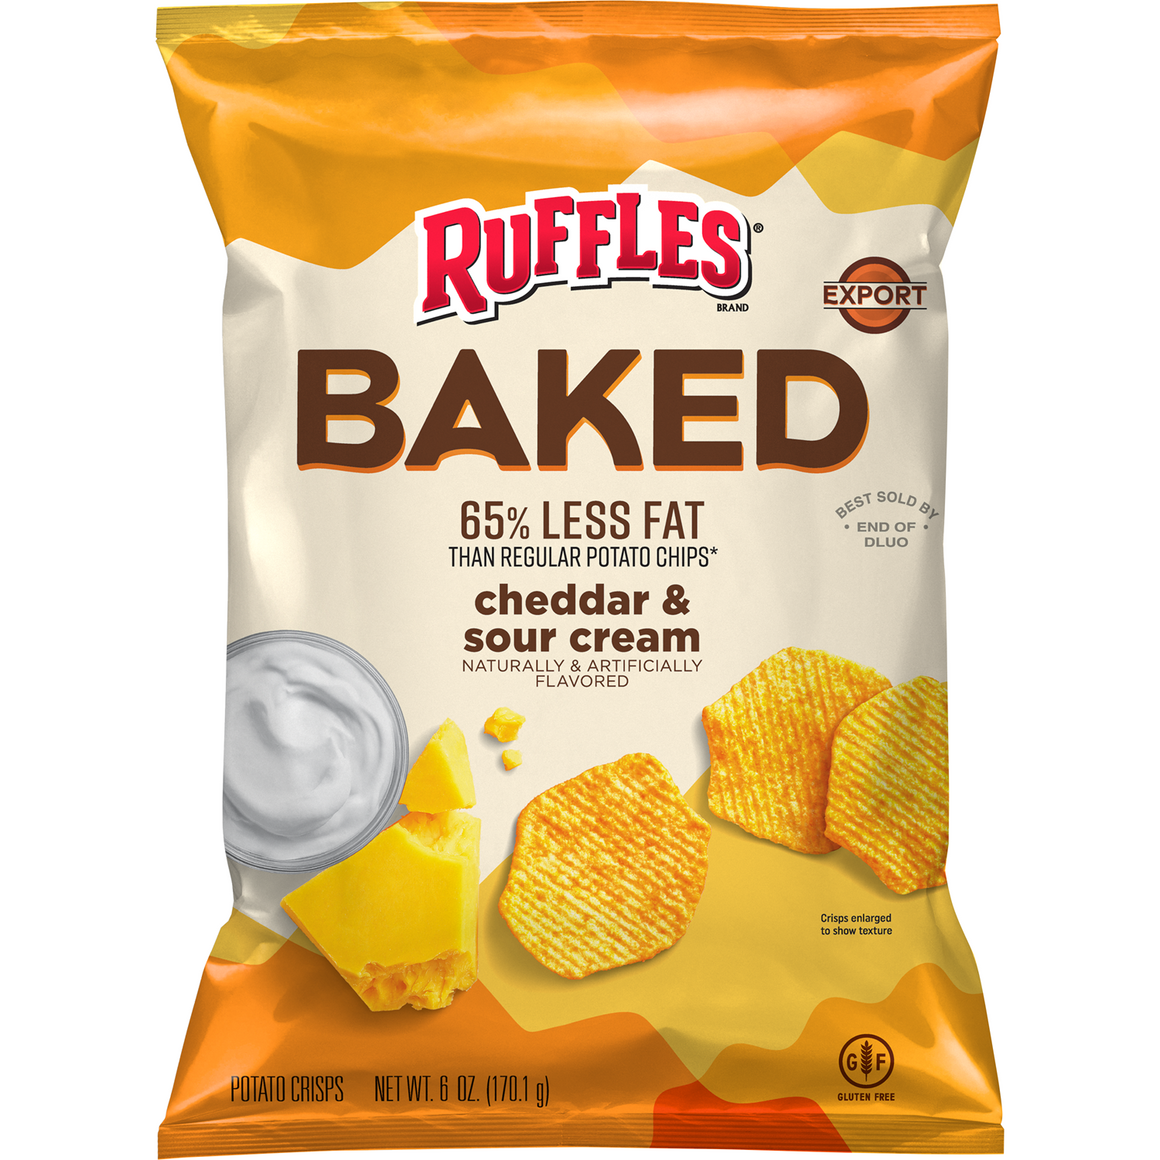 Ruffles Baked Cheddar & Sour Cream , 65% Less Fat Potato Chips 6.OZ (170.1g) - Export